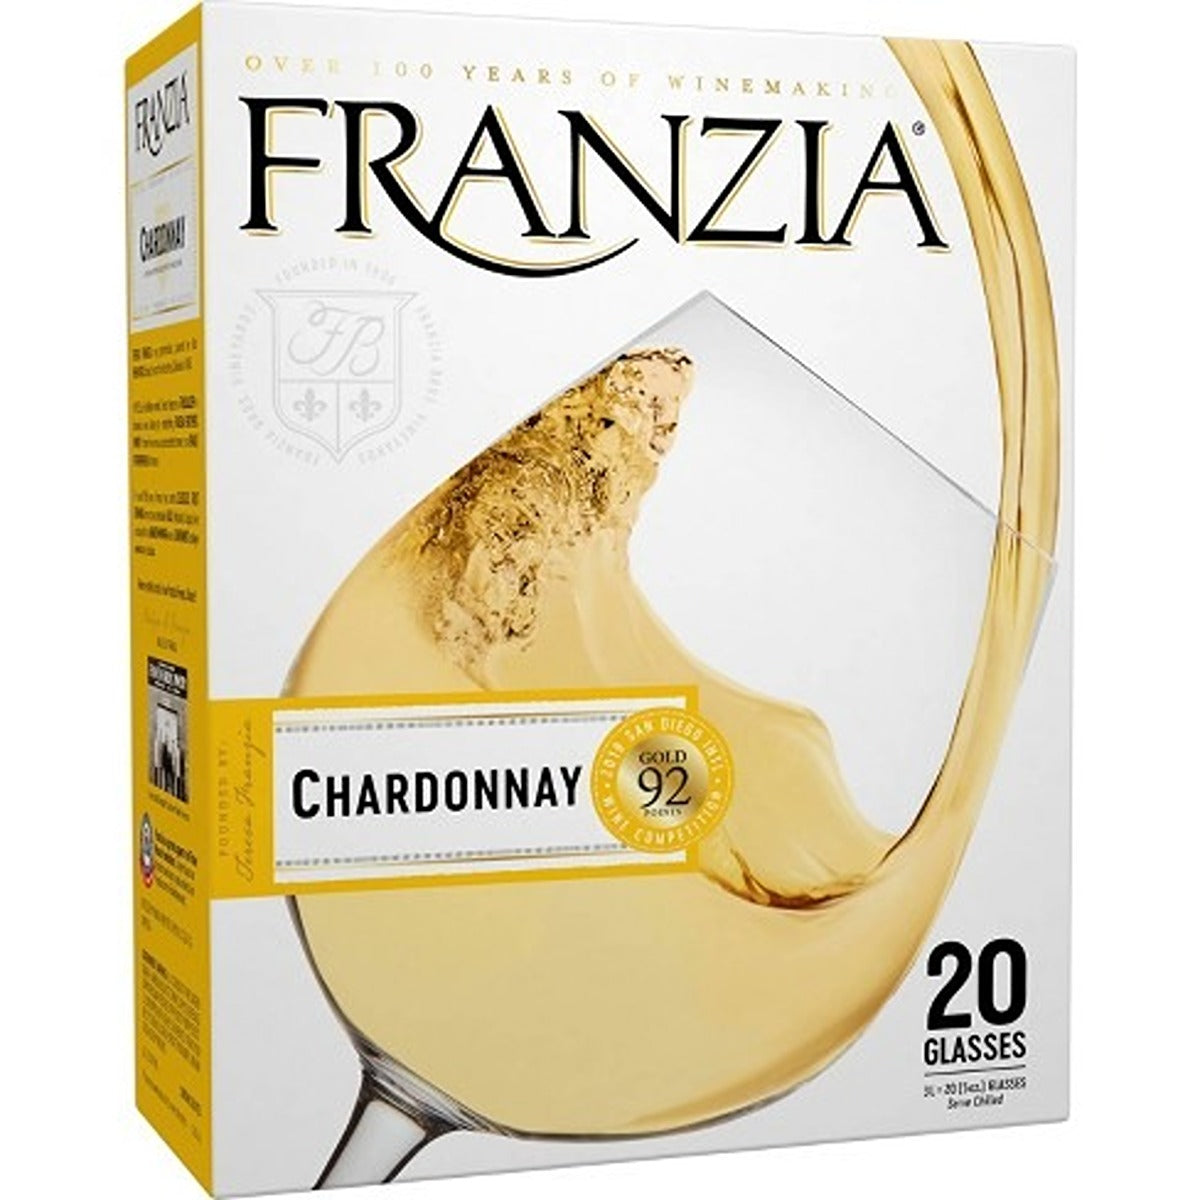 FRANZIA CHARDONNAY 3L